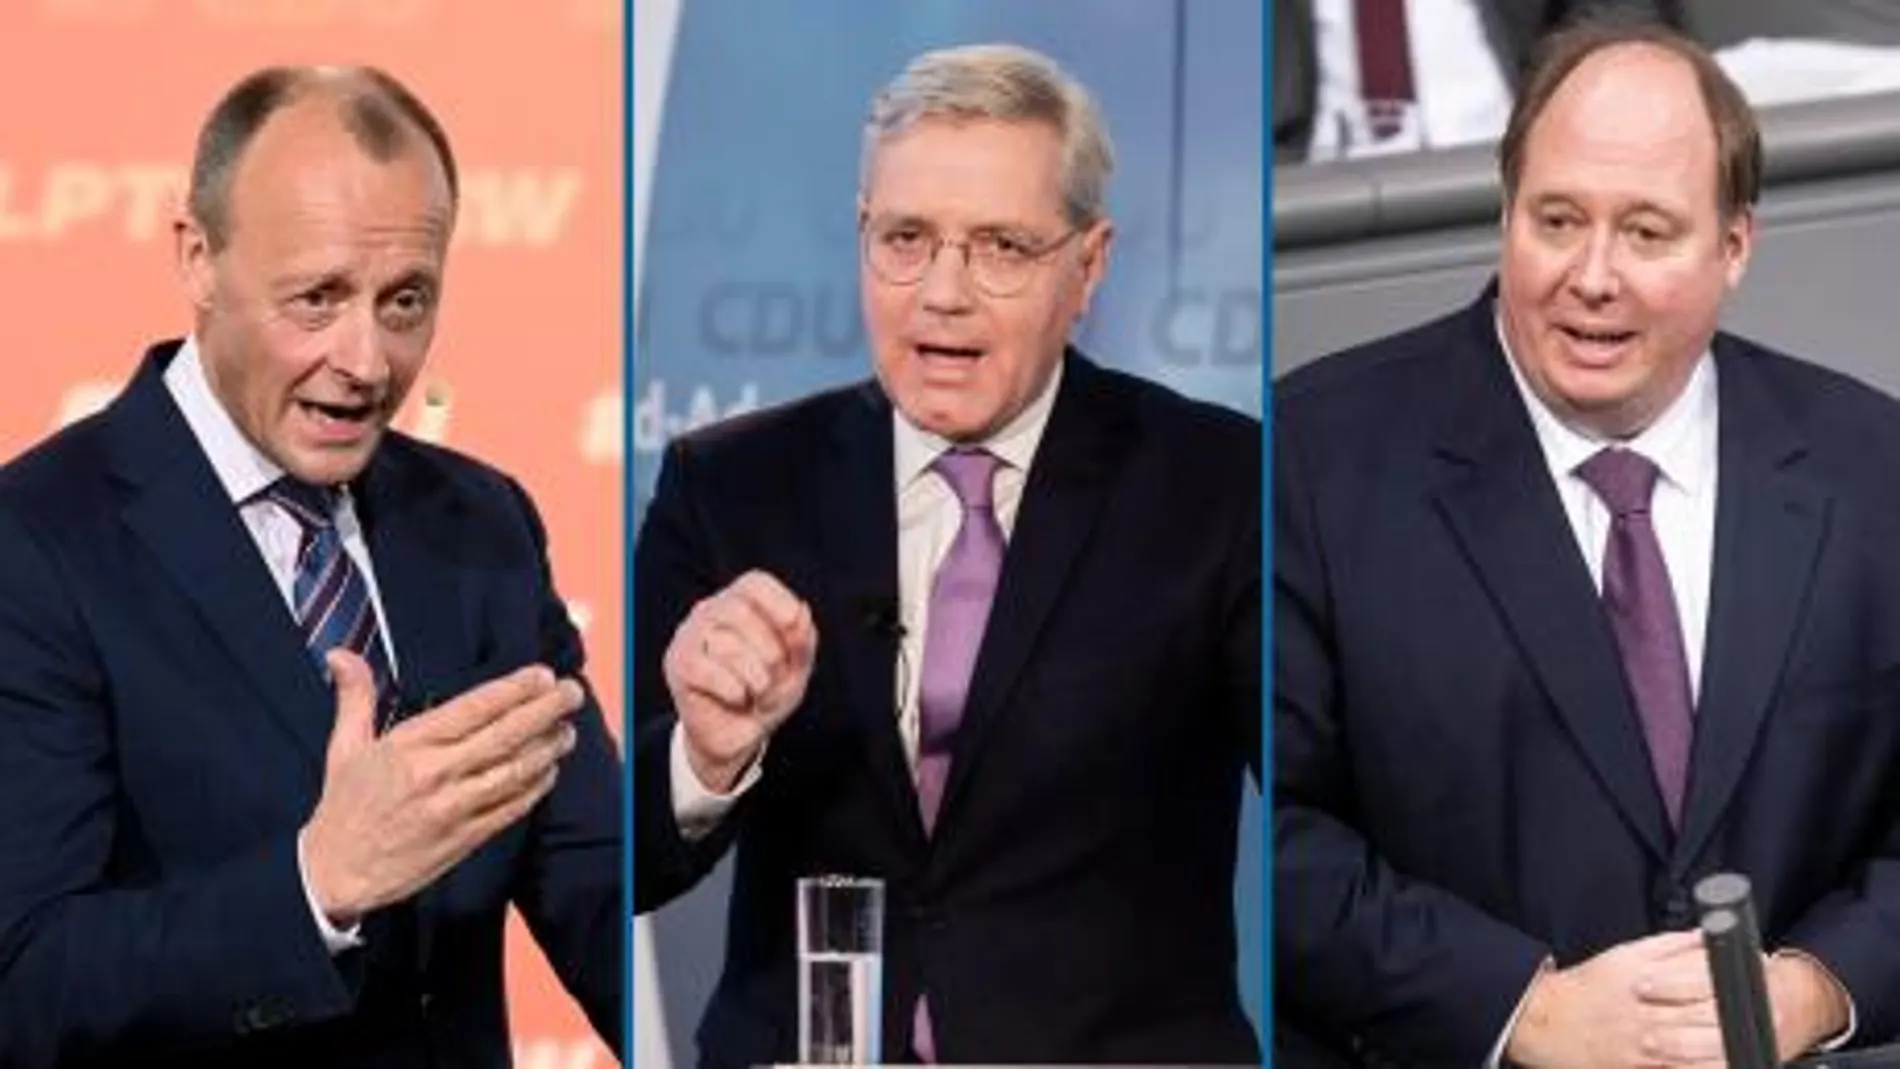 Friedrich Merz, Norbert Röttgen y Helge Braun, los aspirantes a liderar la CDU